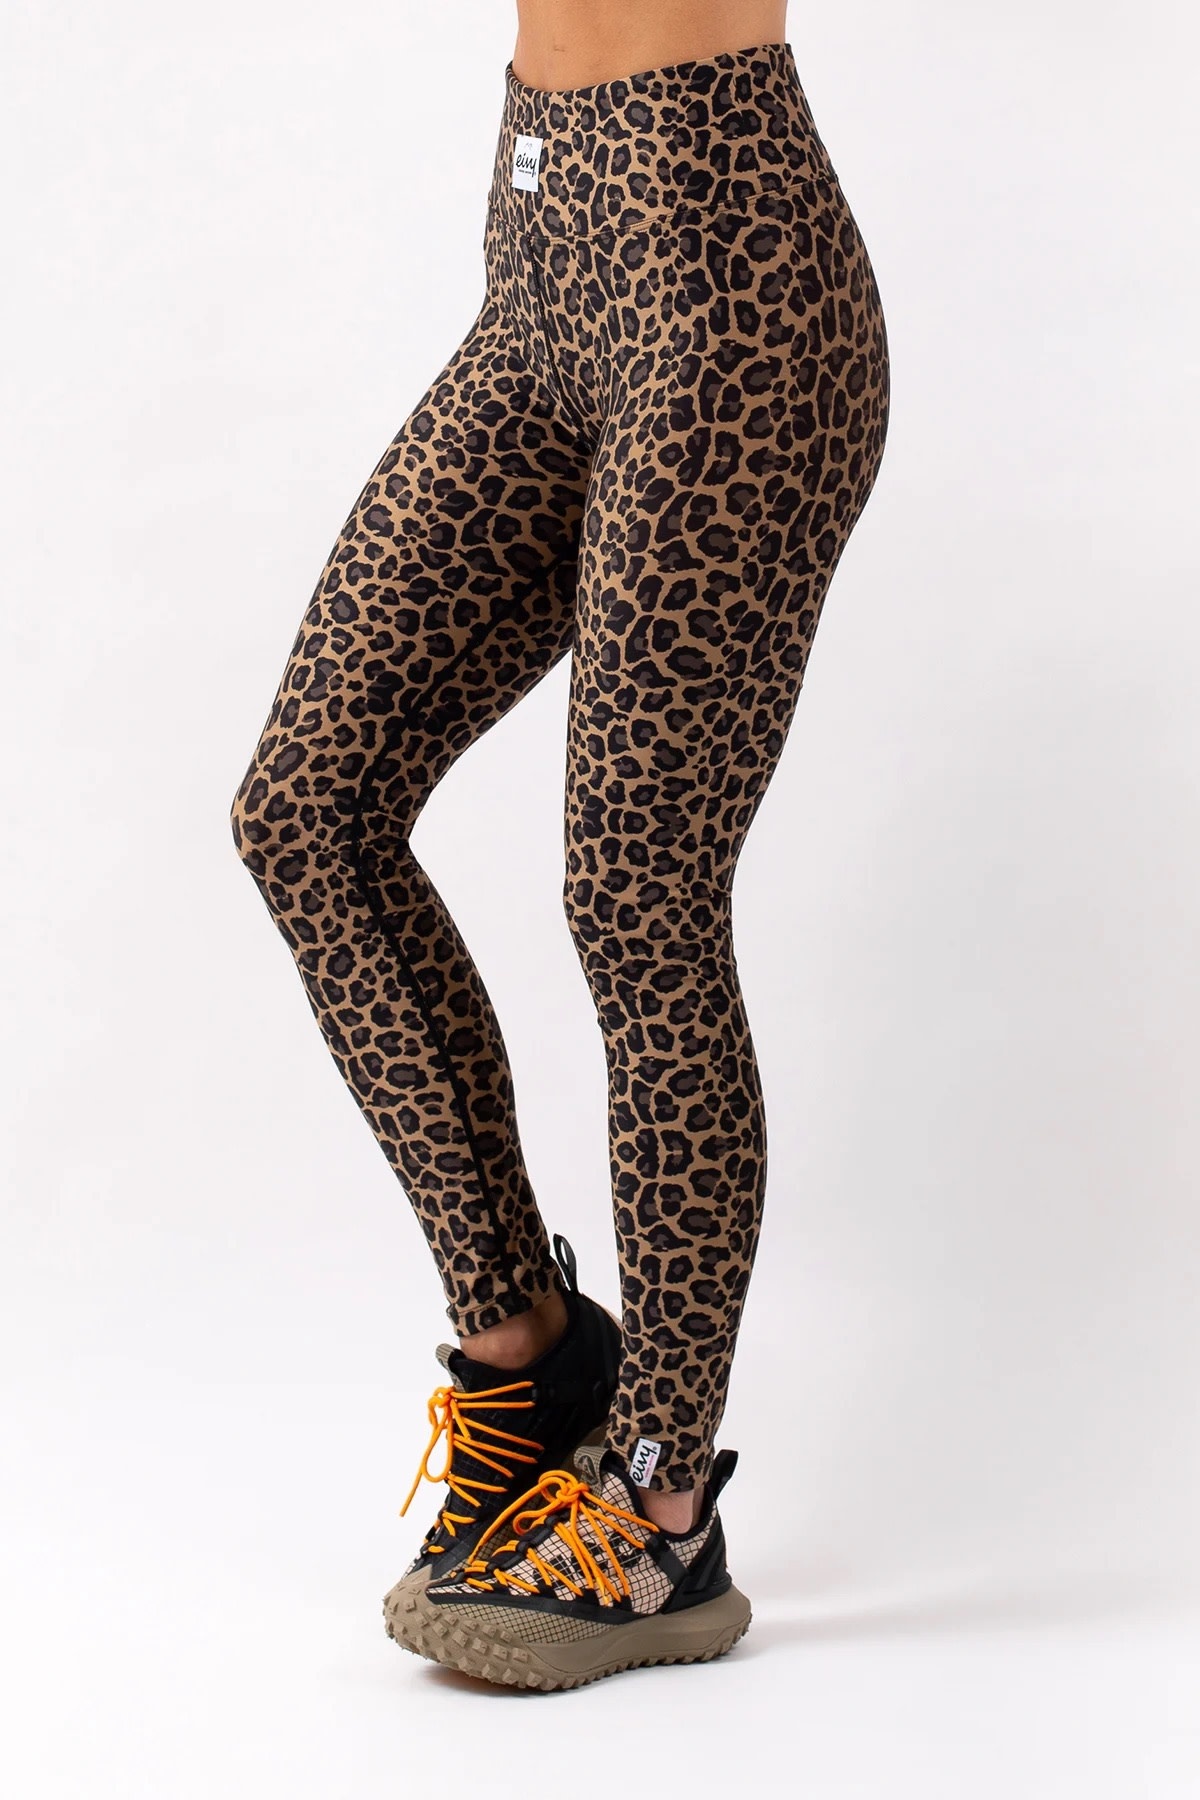 Cheetah Print Workout Leggings - Boutique 23